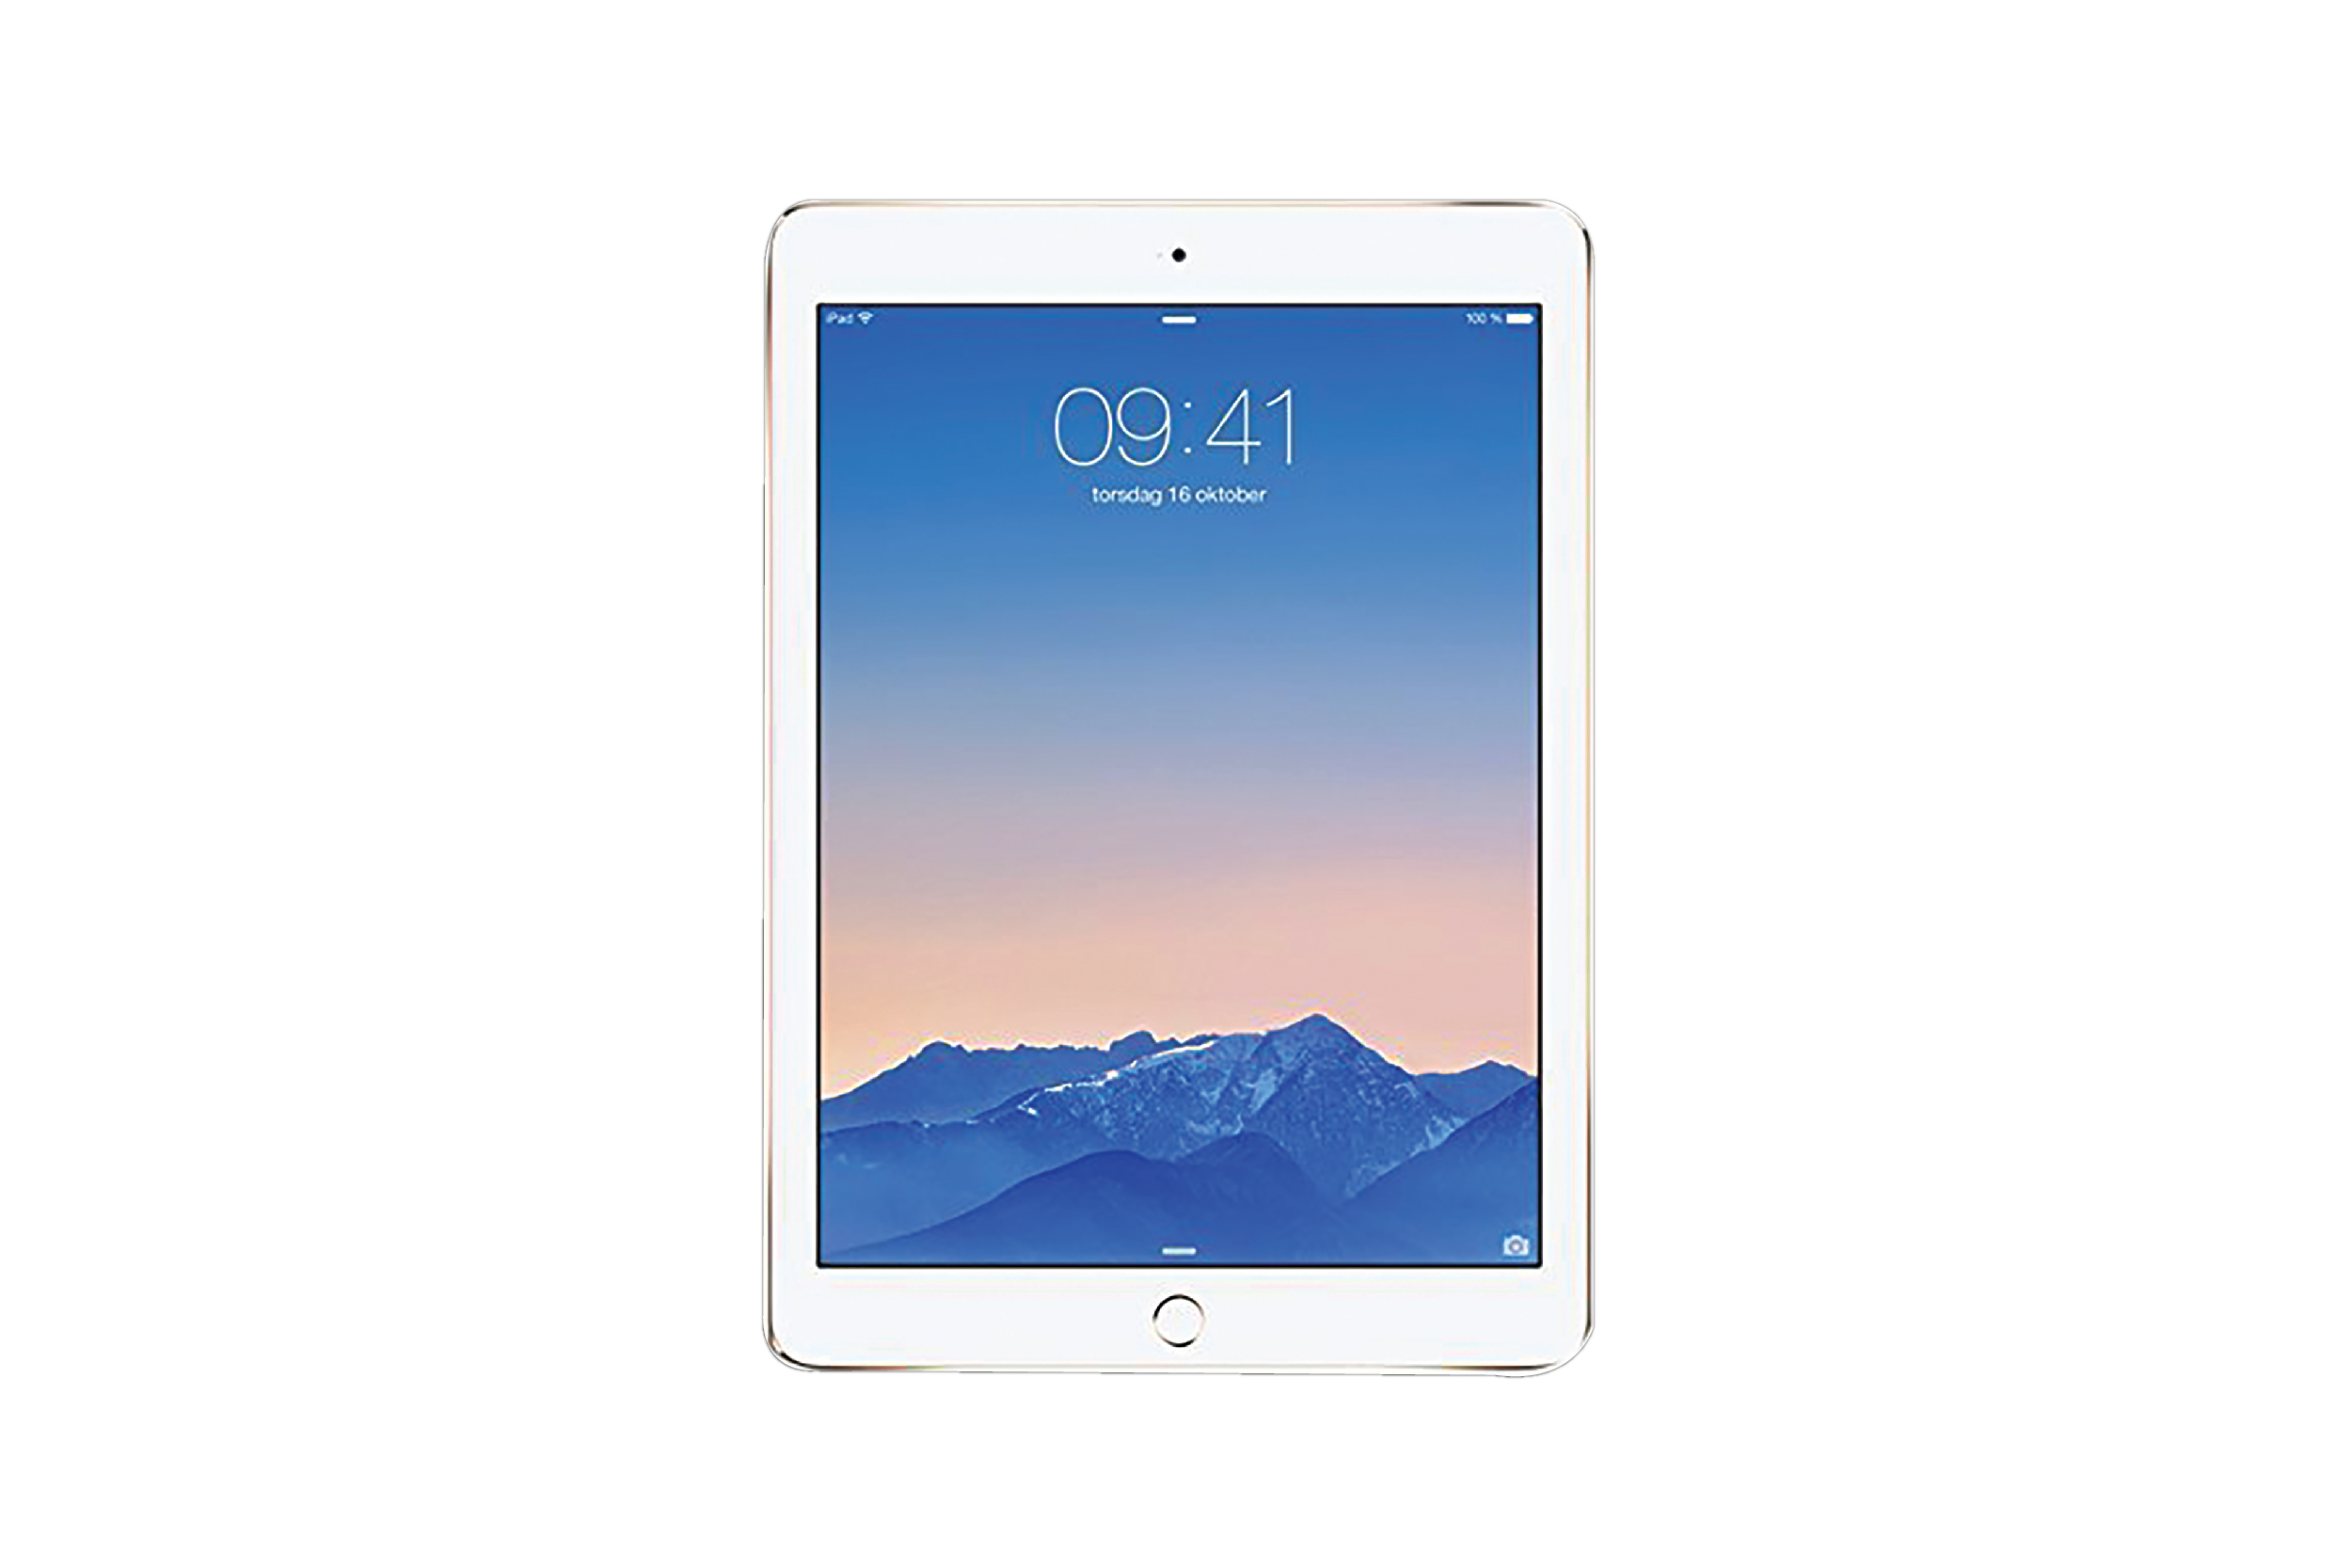 Apple iPad Air 2 Tablet (9.7 inch, 16GB, Wi-Fi), Gold
